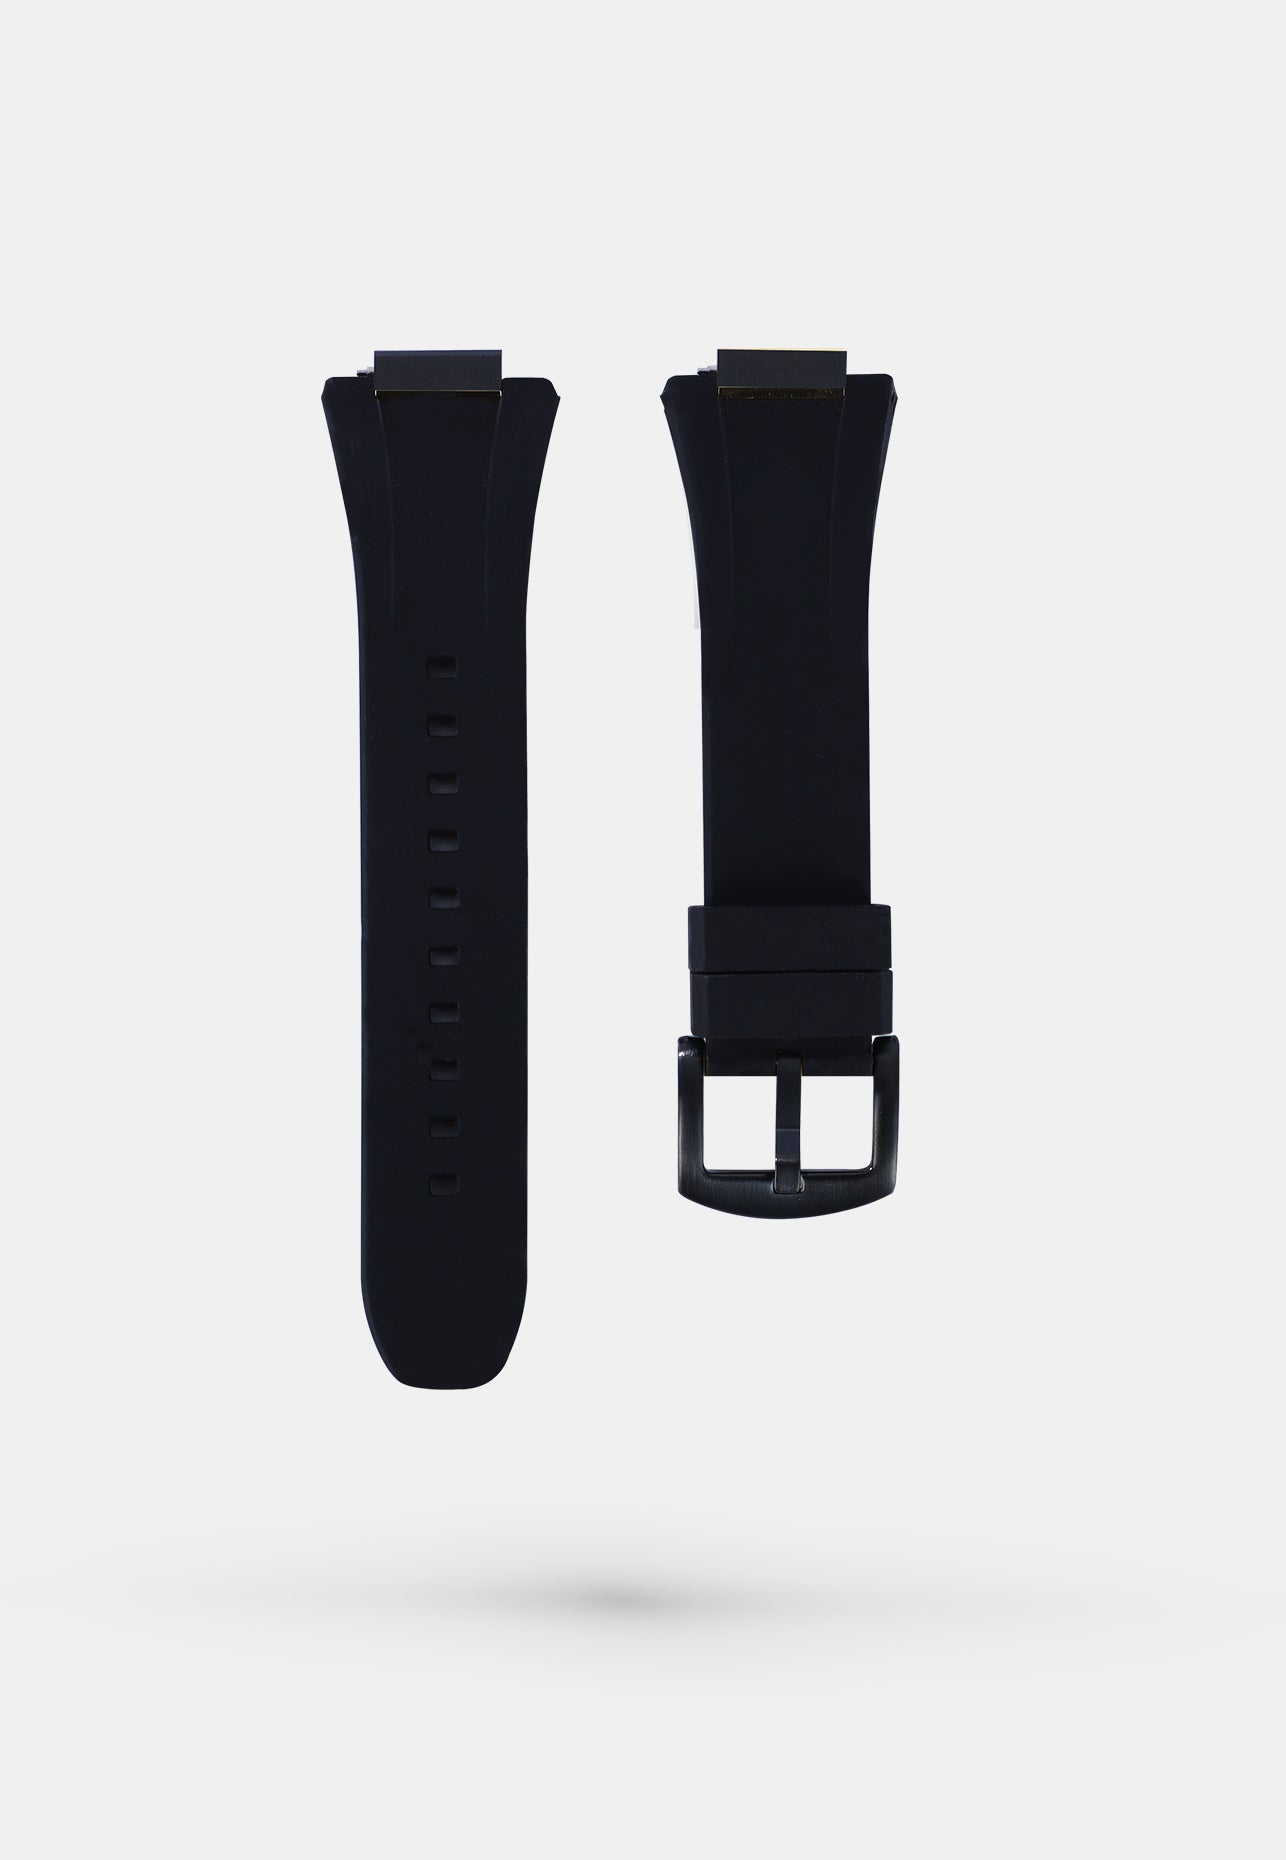 Black Daytona -  Silicone Apple Watch Band  - Imperial OAK - 44mm